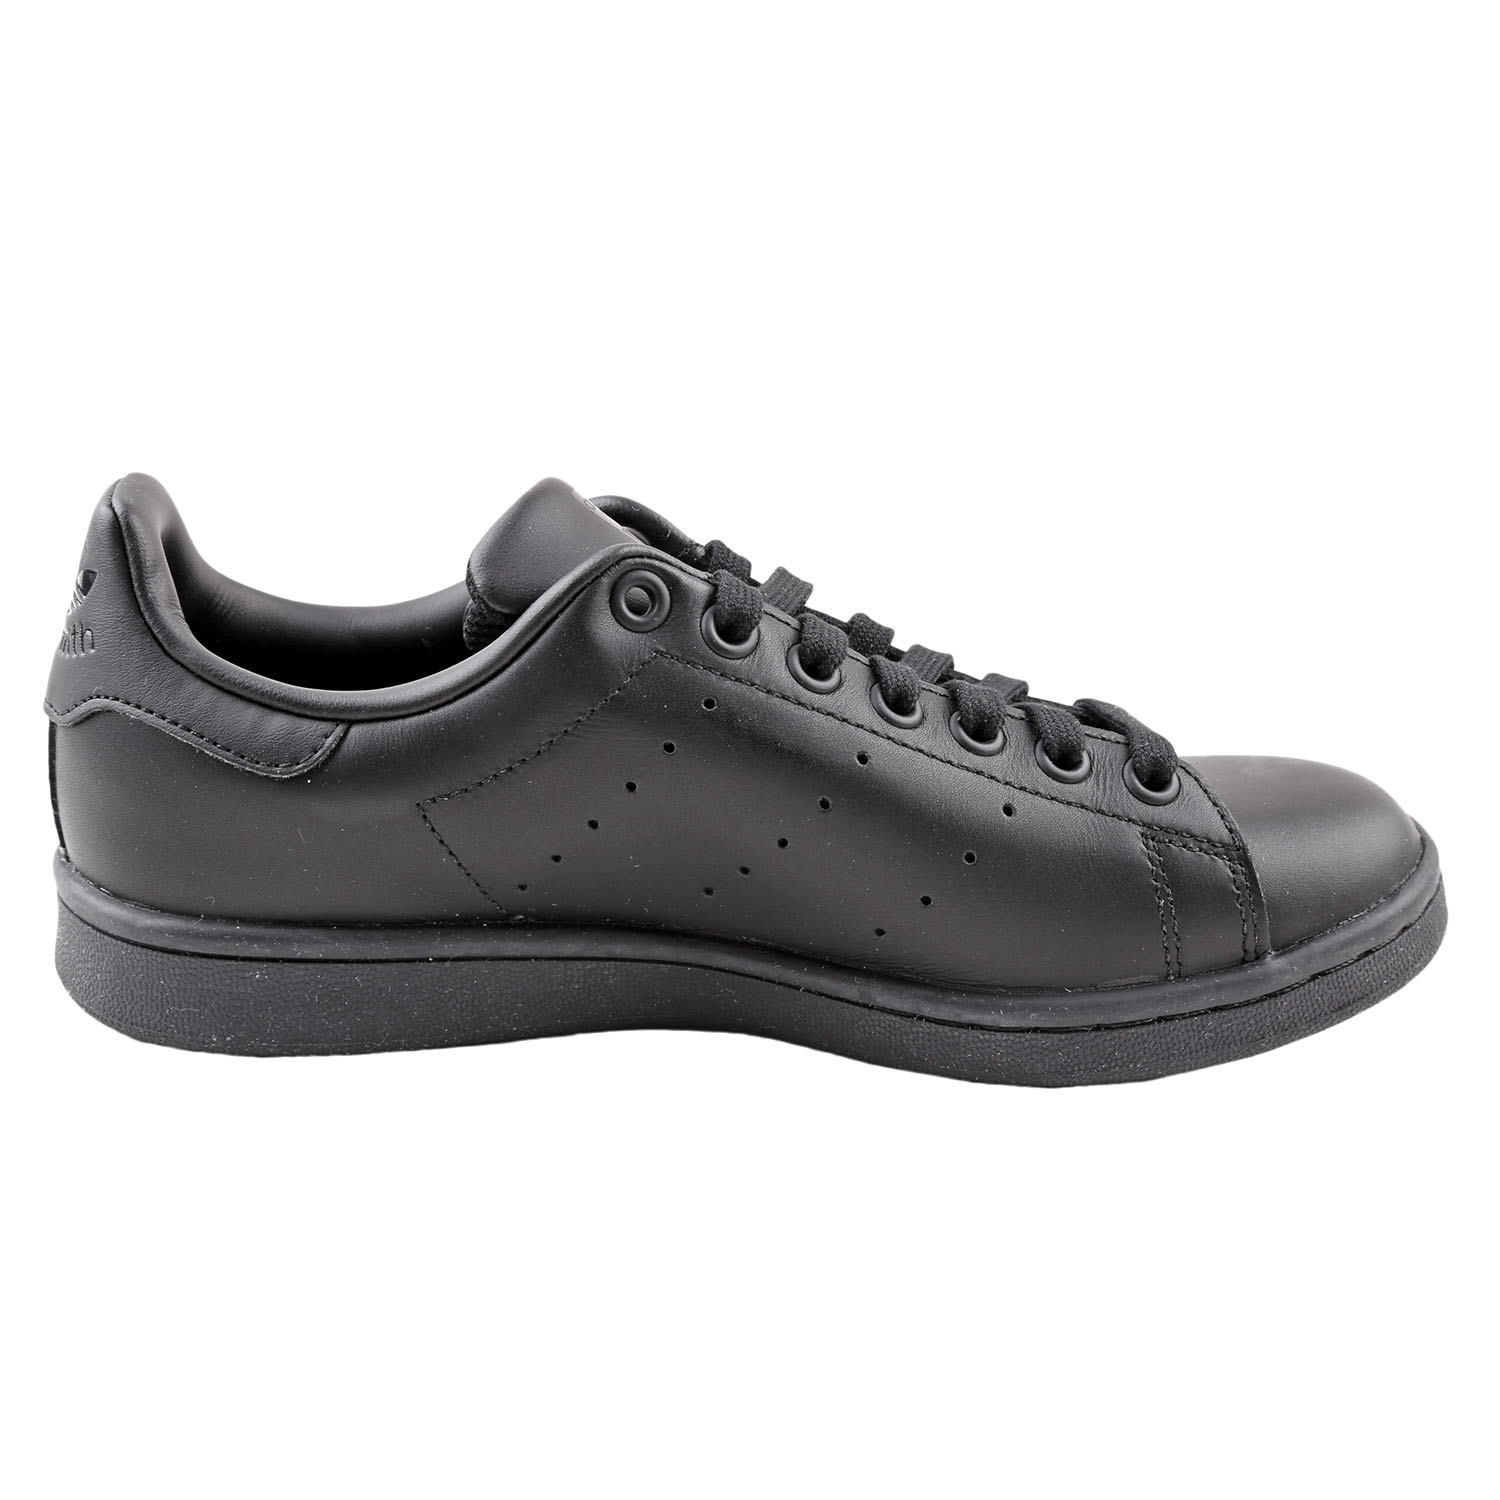 Adidas Mens Original Stan Smith Fashion Shoes M20327 Core ...